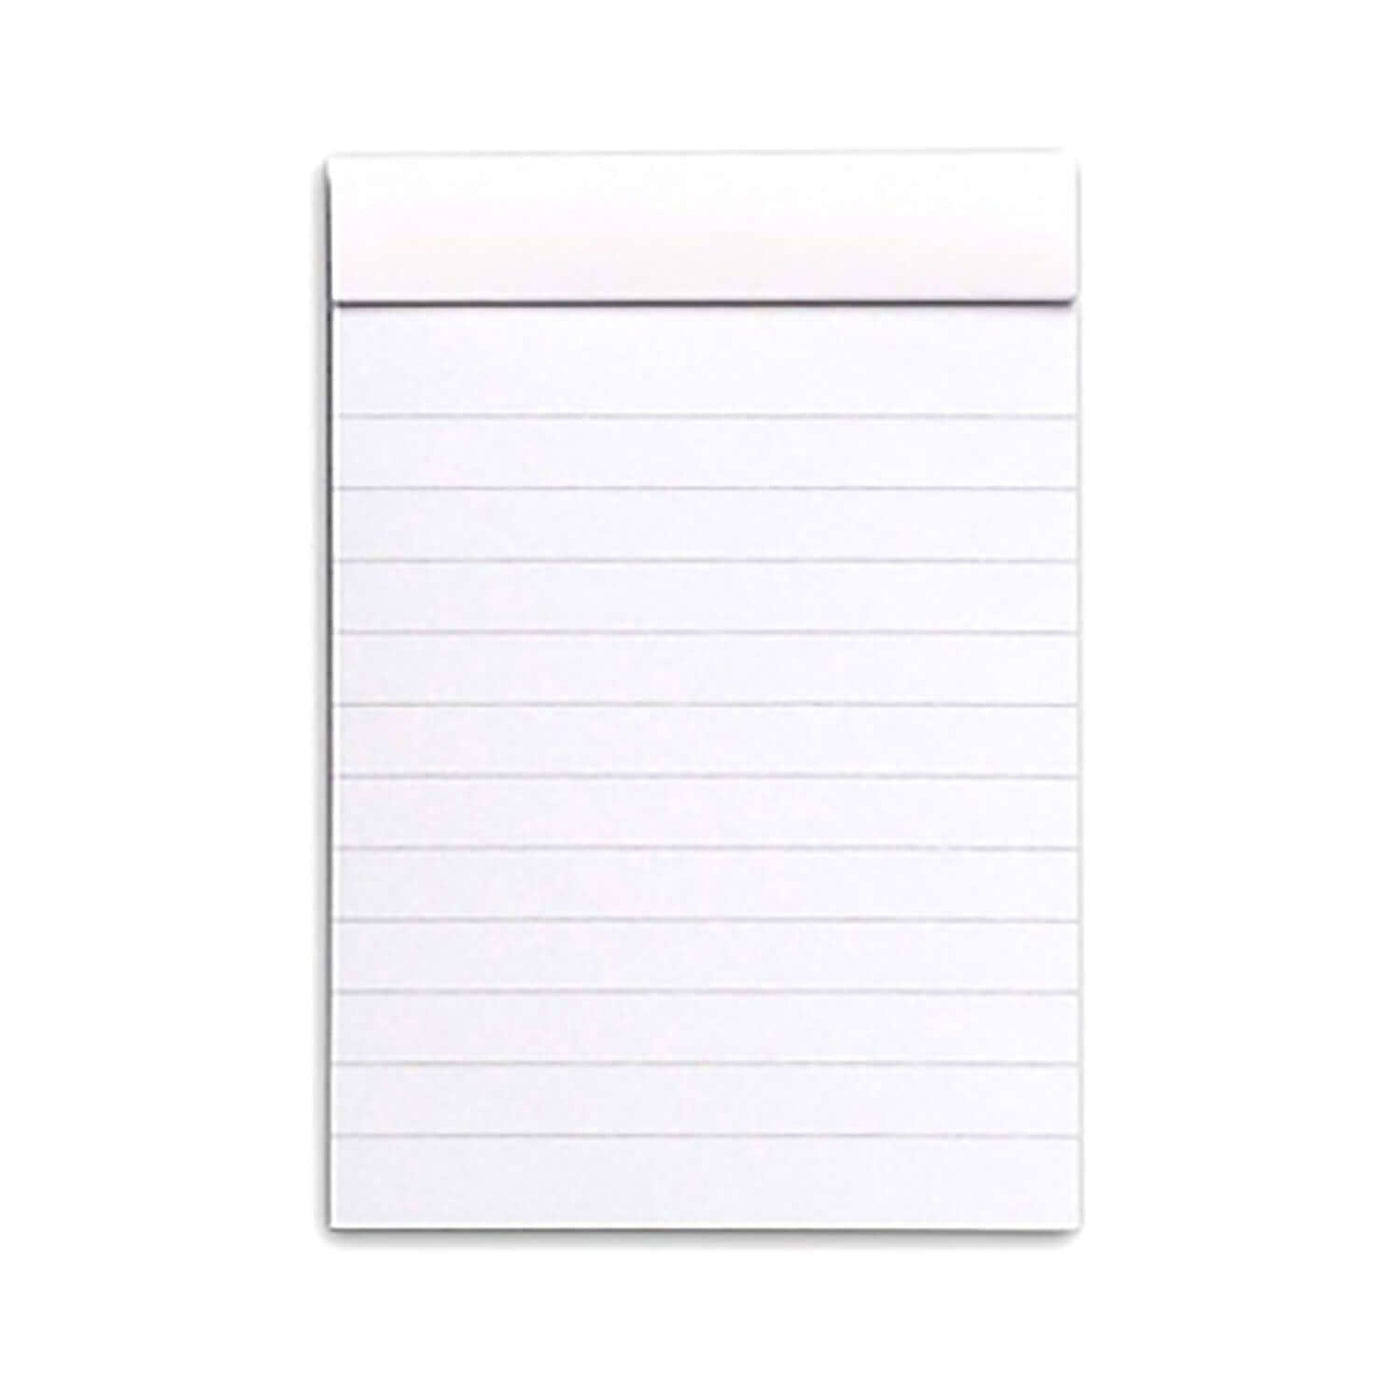 Rhodia Basics Notepad, White (Ruled) - Top Stapled 5